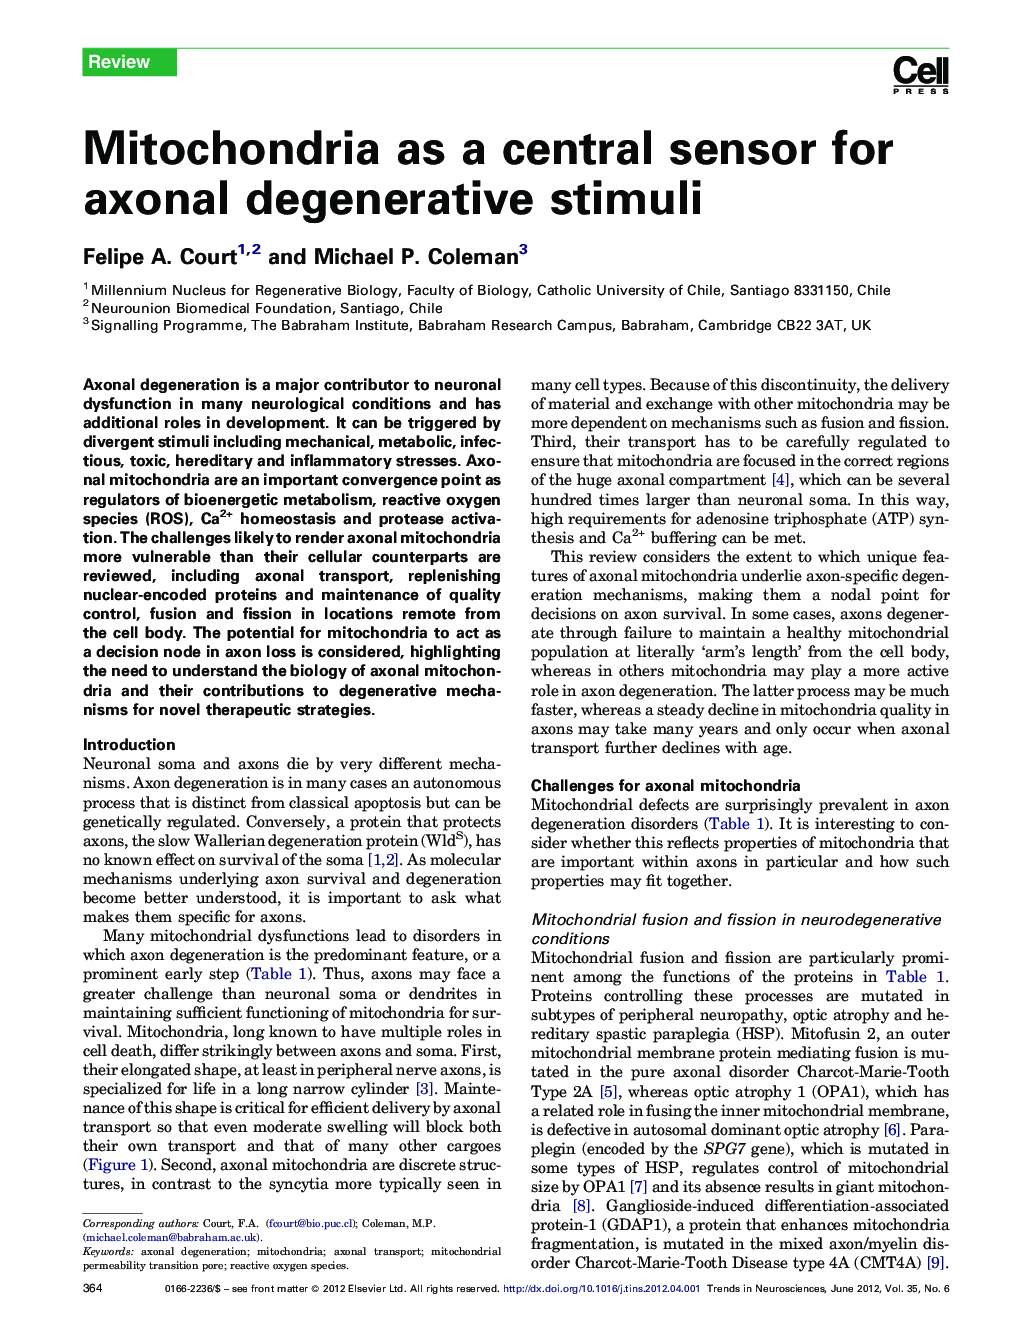 Mitochondria as a central sensor for axonal degenerative stimuli